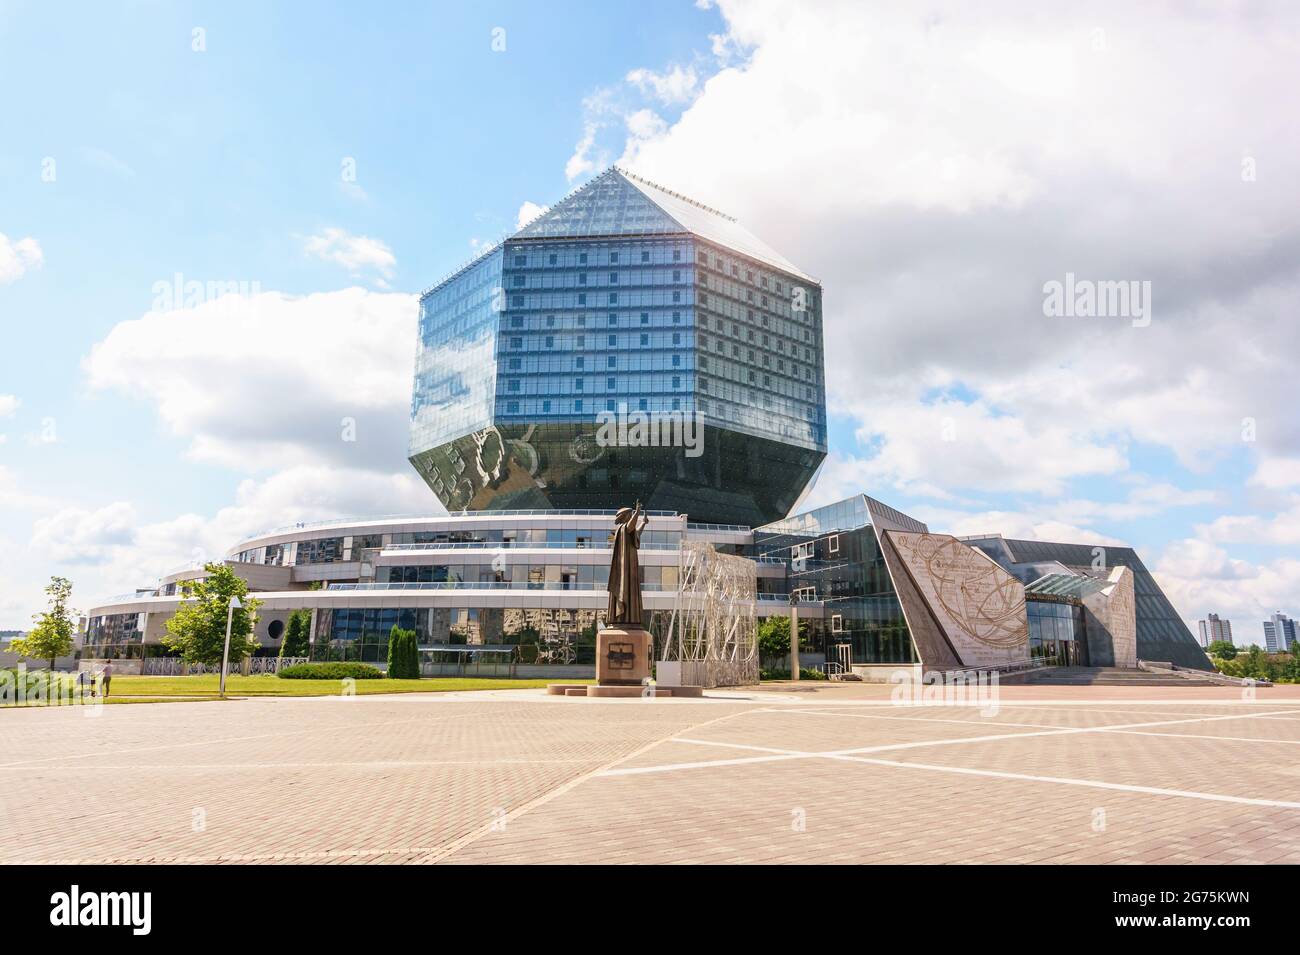 MINSK, BELARUS - JUNE 26, 2021: The building of the National library in Minsk, Belarus. Huge glass diamond design, summer day Stock Photo